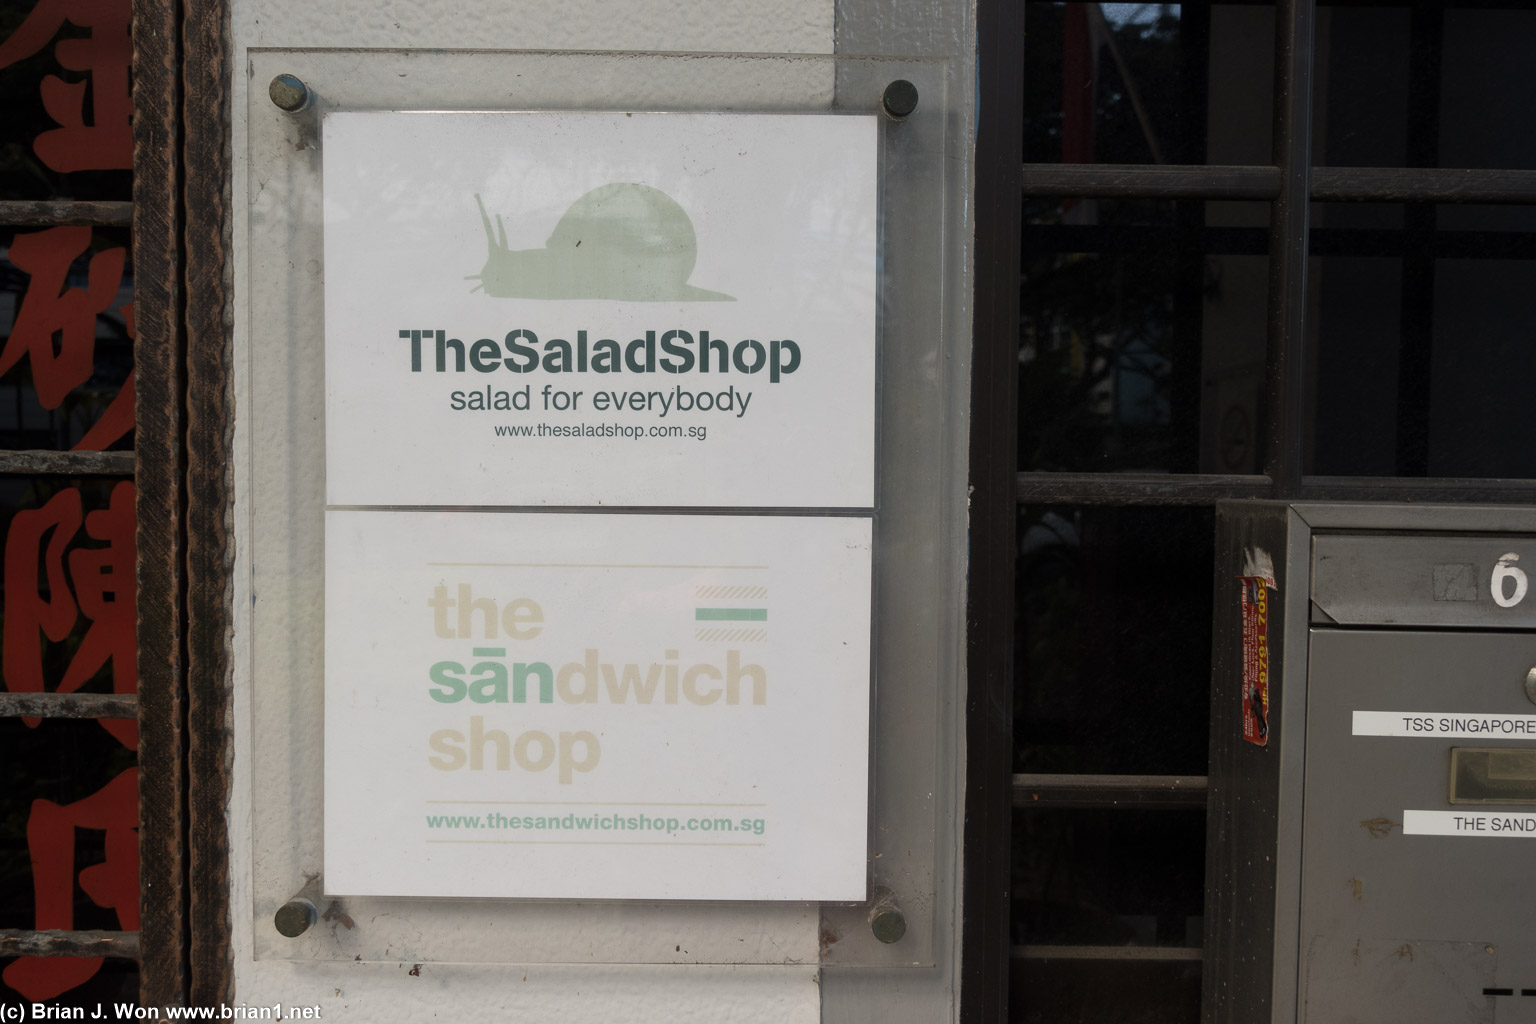 Salad shop with snails as a logo?